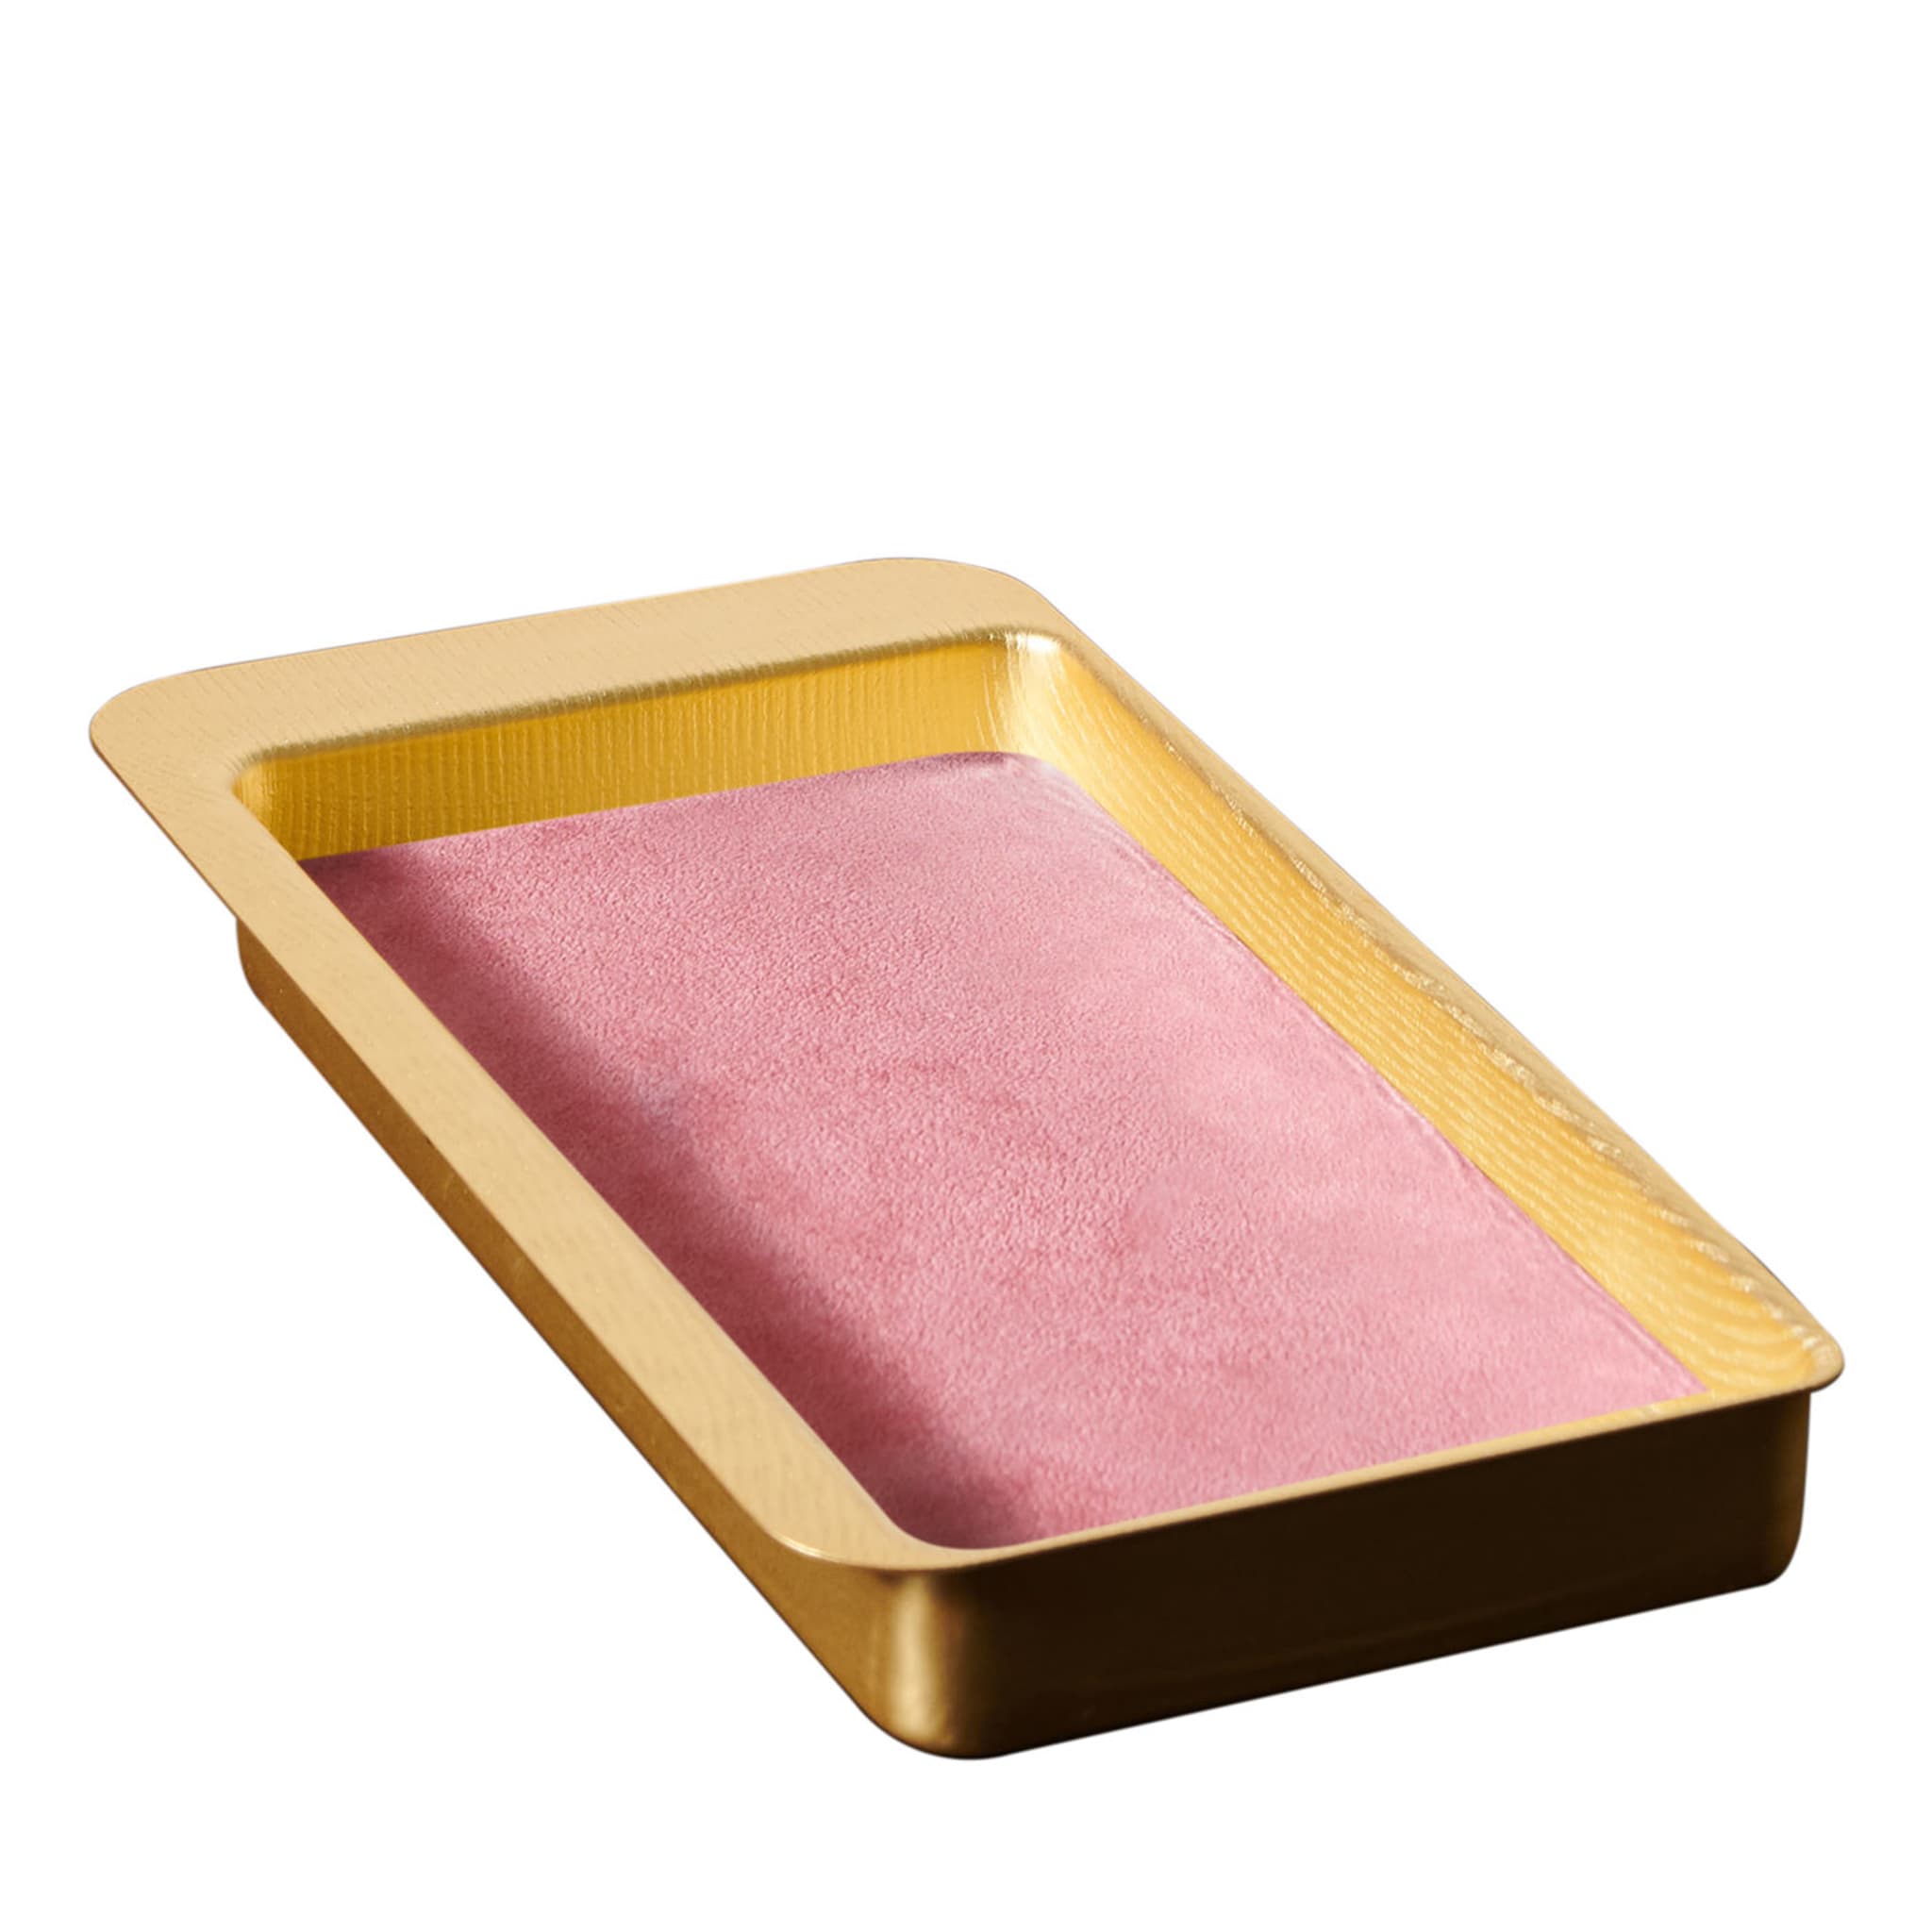 Firenze Vassoio rettangolare a tasca vuota oro e rosa - Vista principale